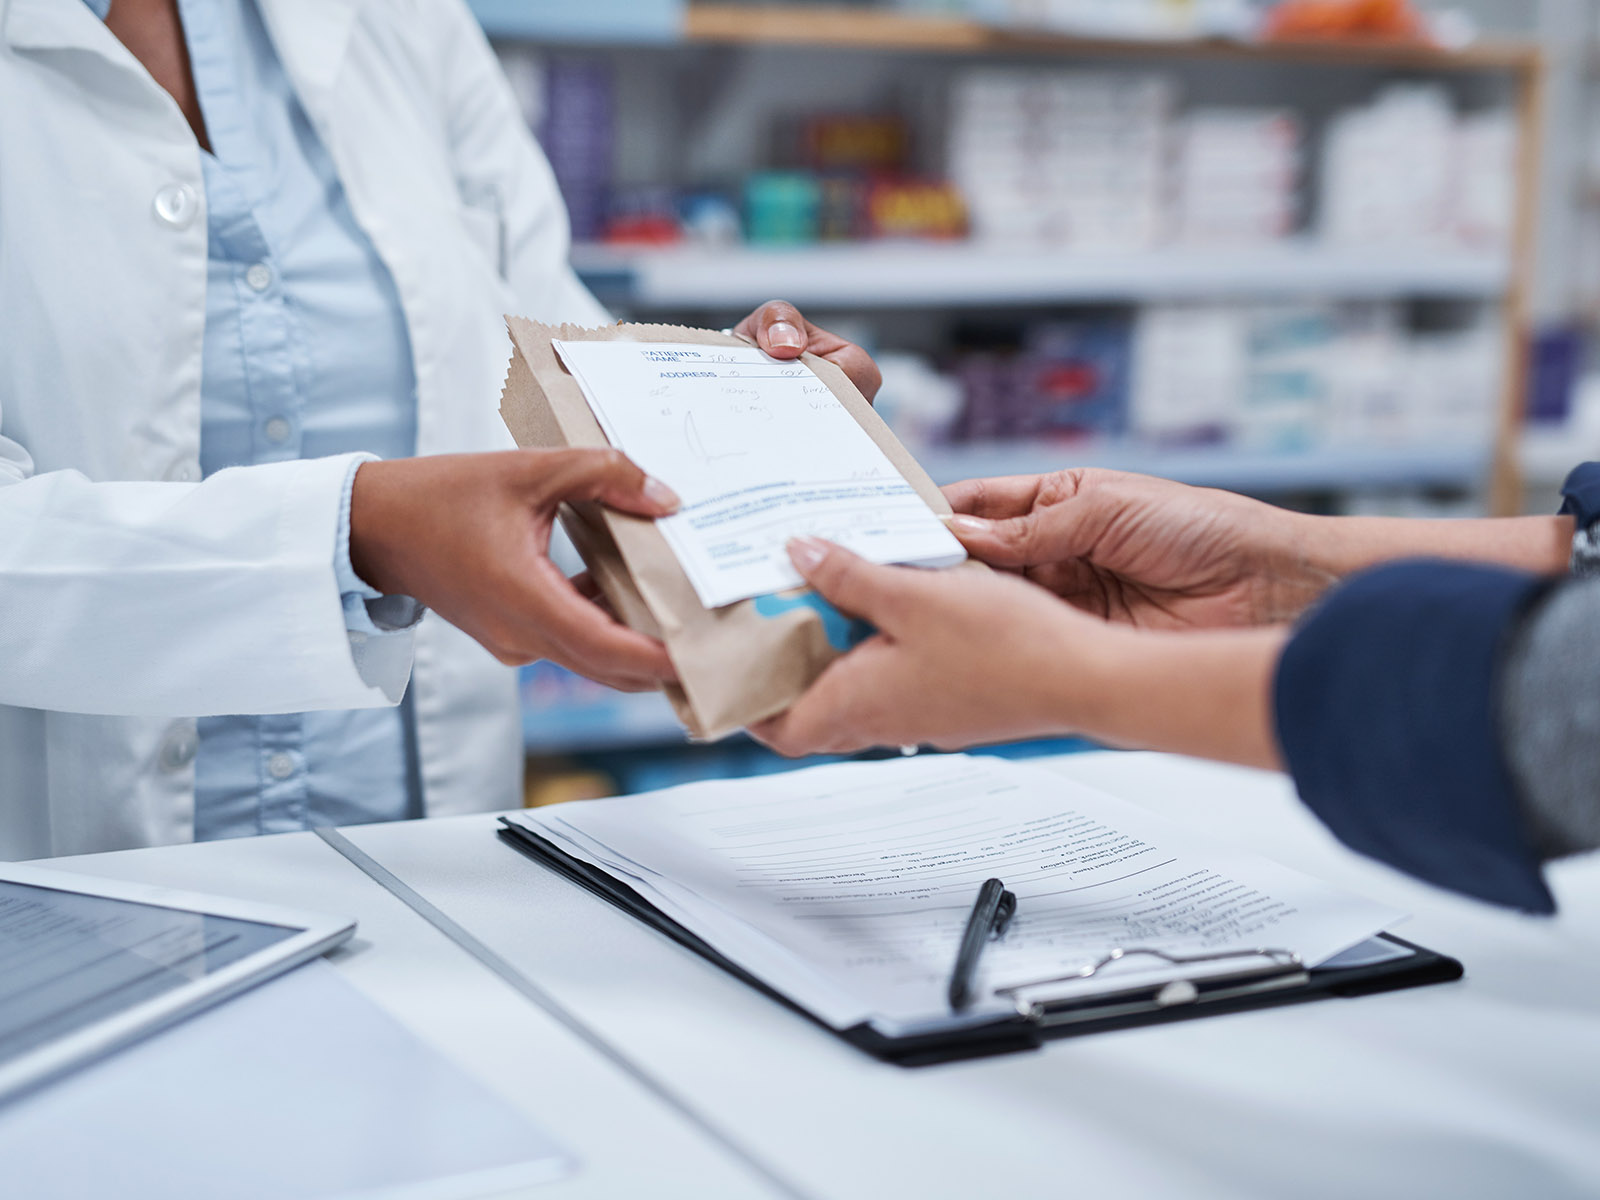 Pharmacist hands a prescription to a patient